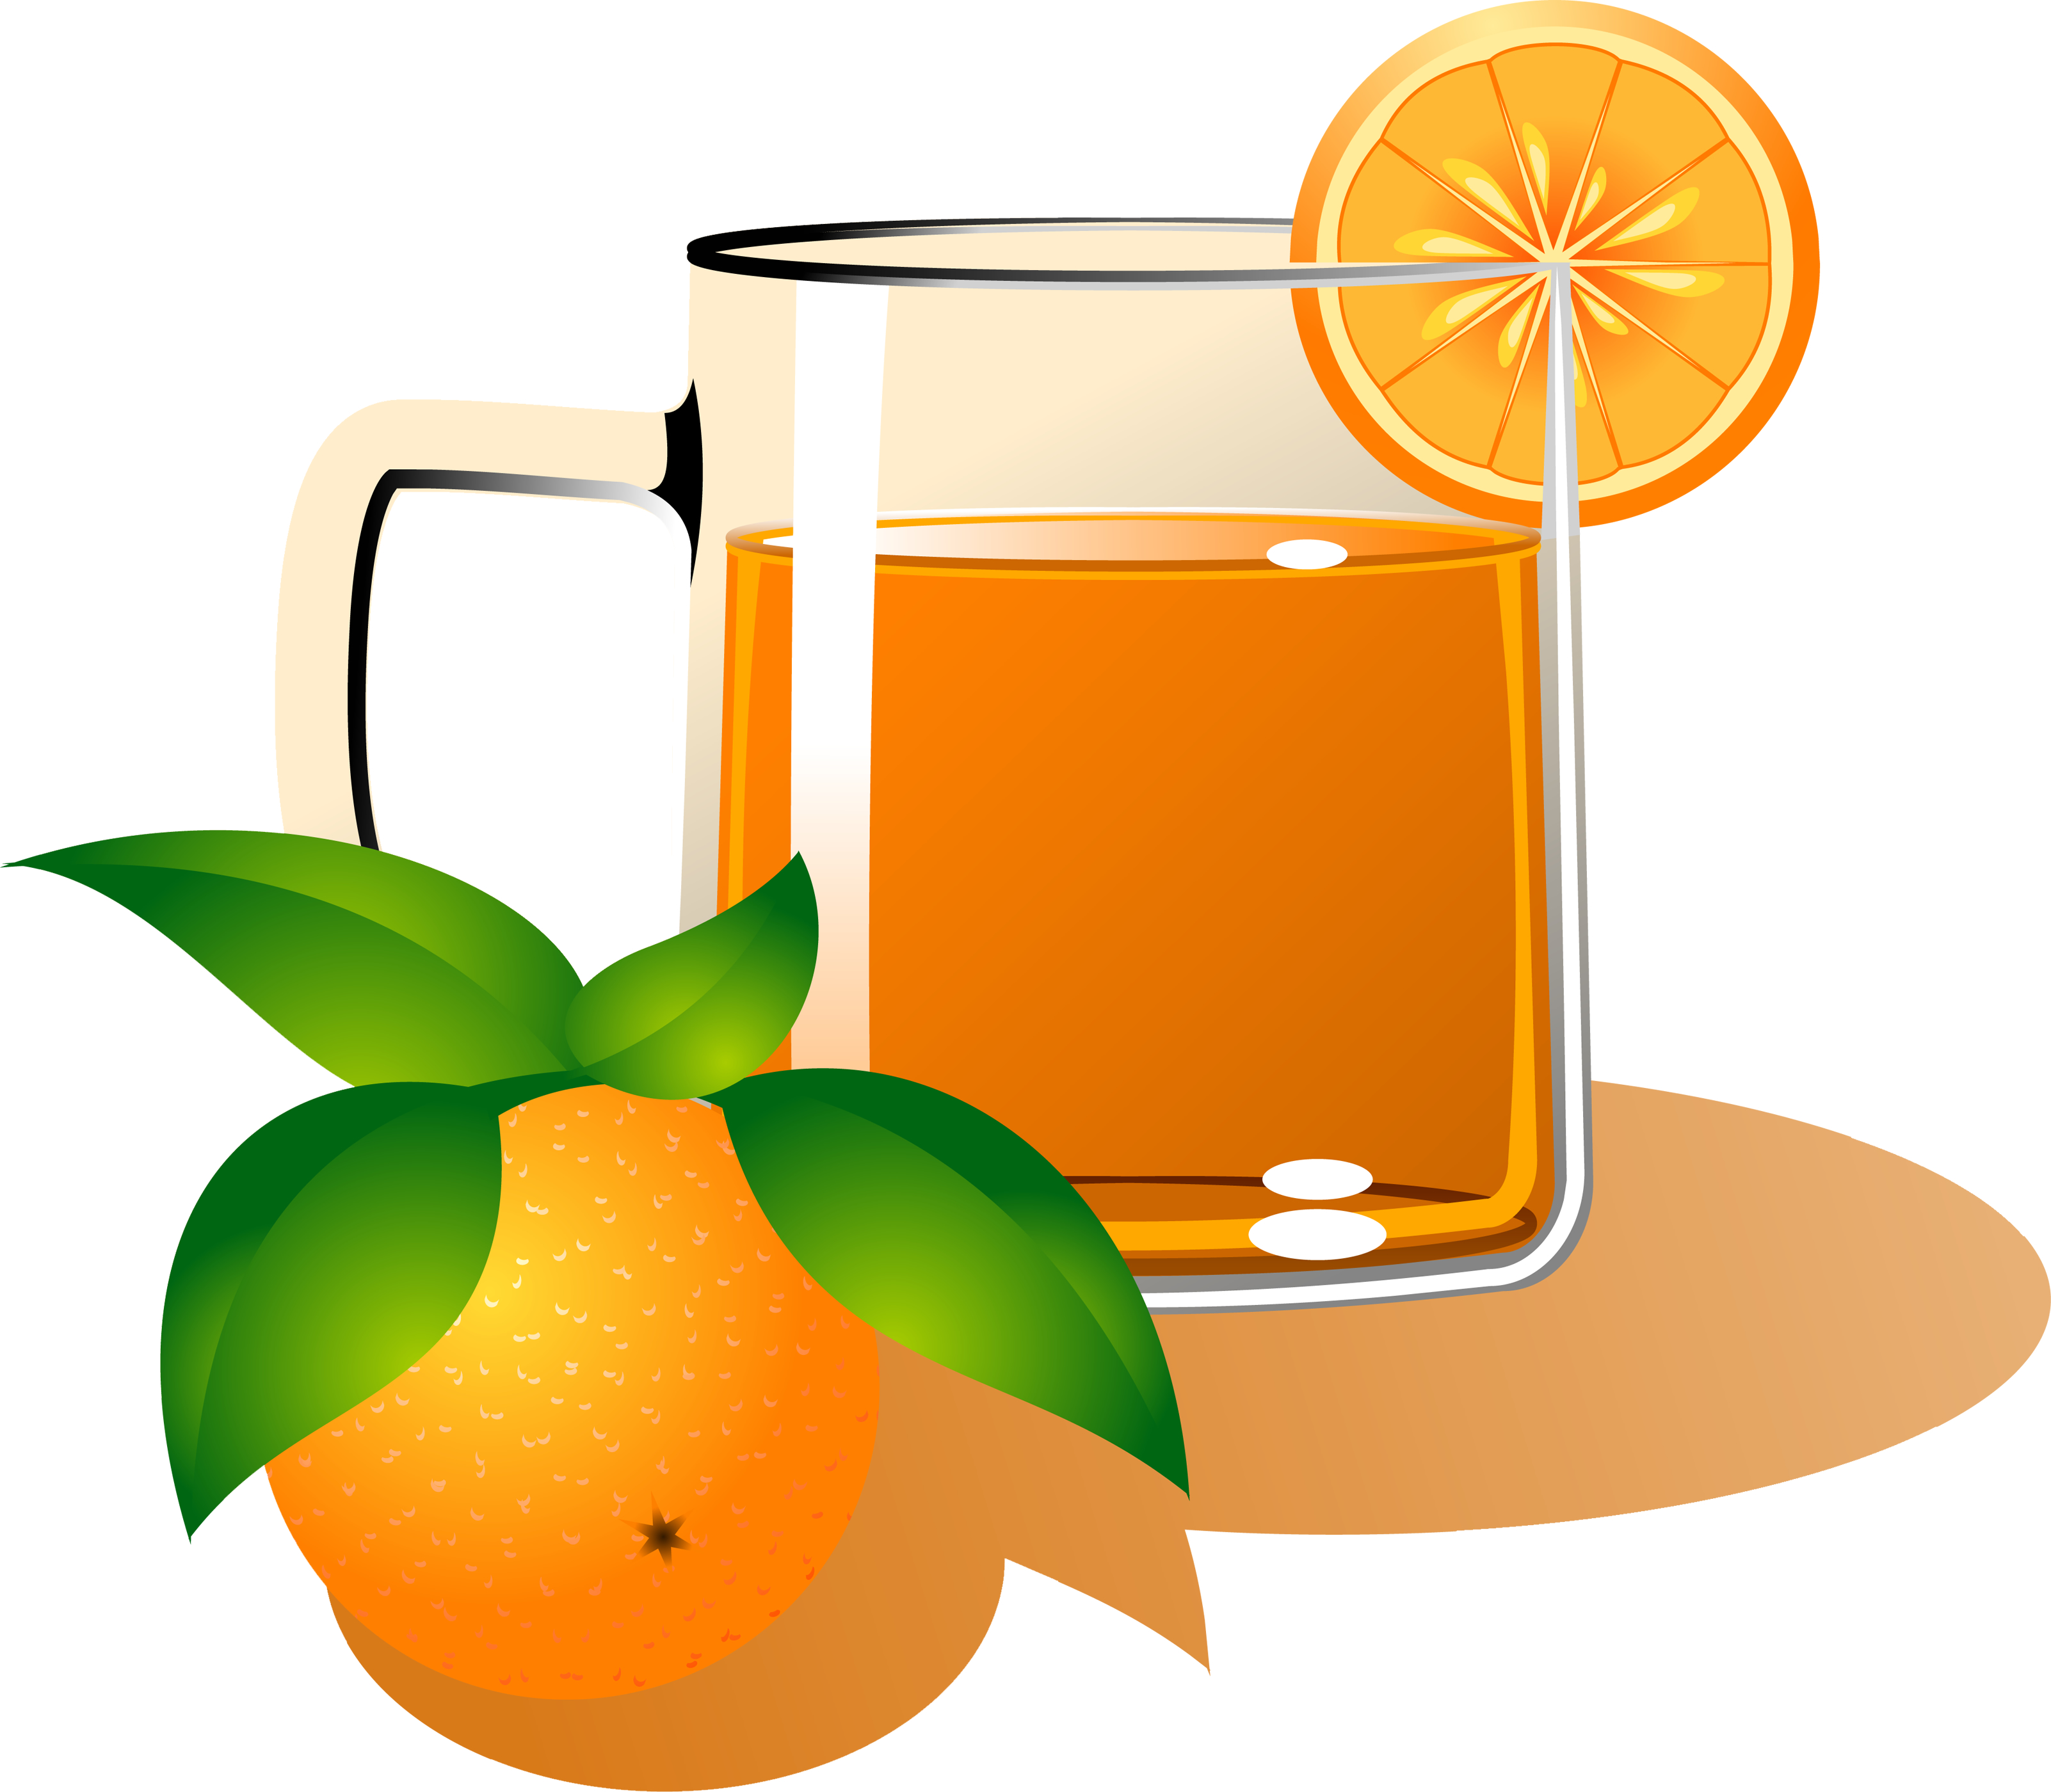 of orange juice in a glass .